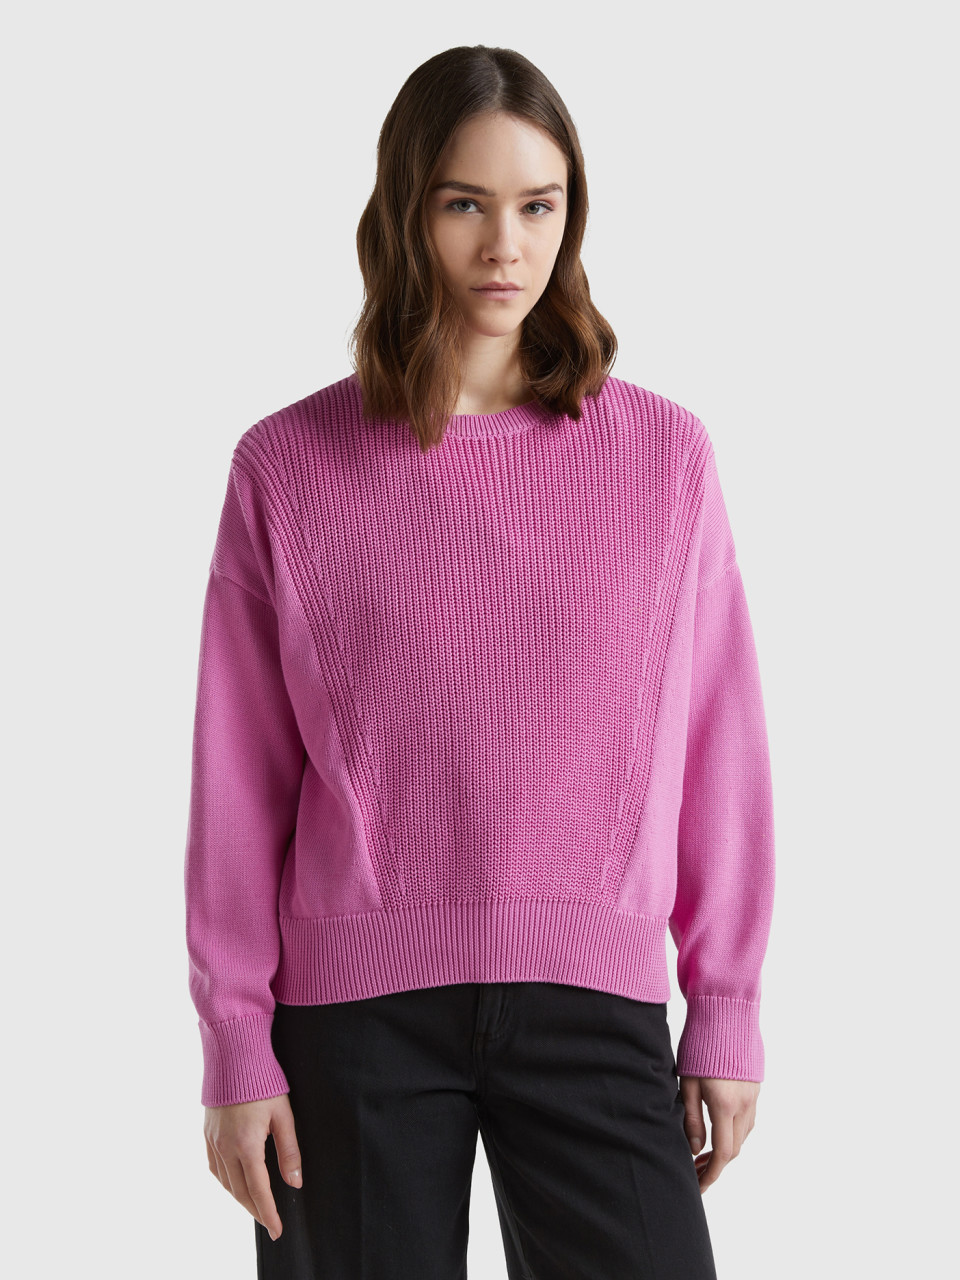 Benetton, Mauve Pink Cotton Sweater, Mauve, Women